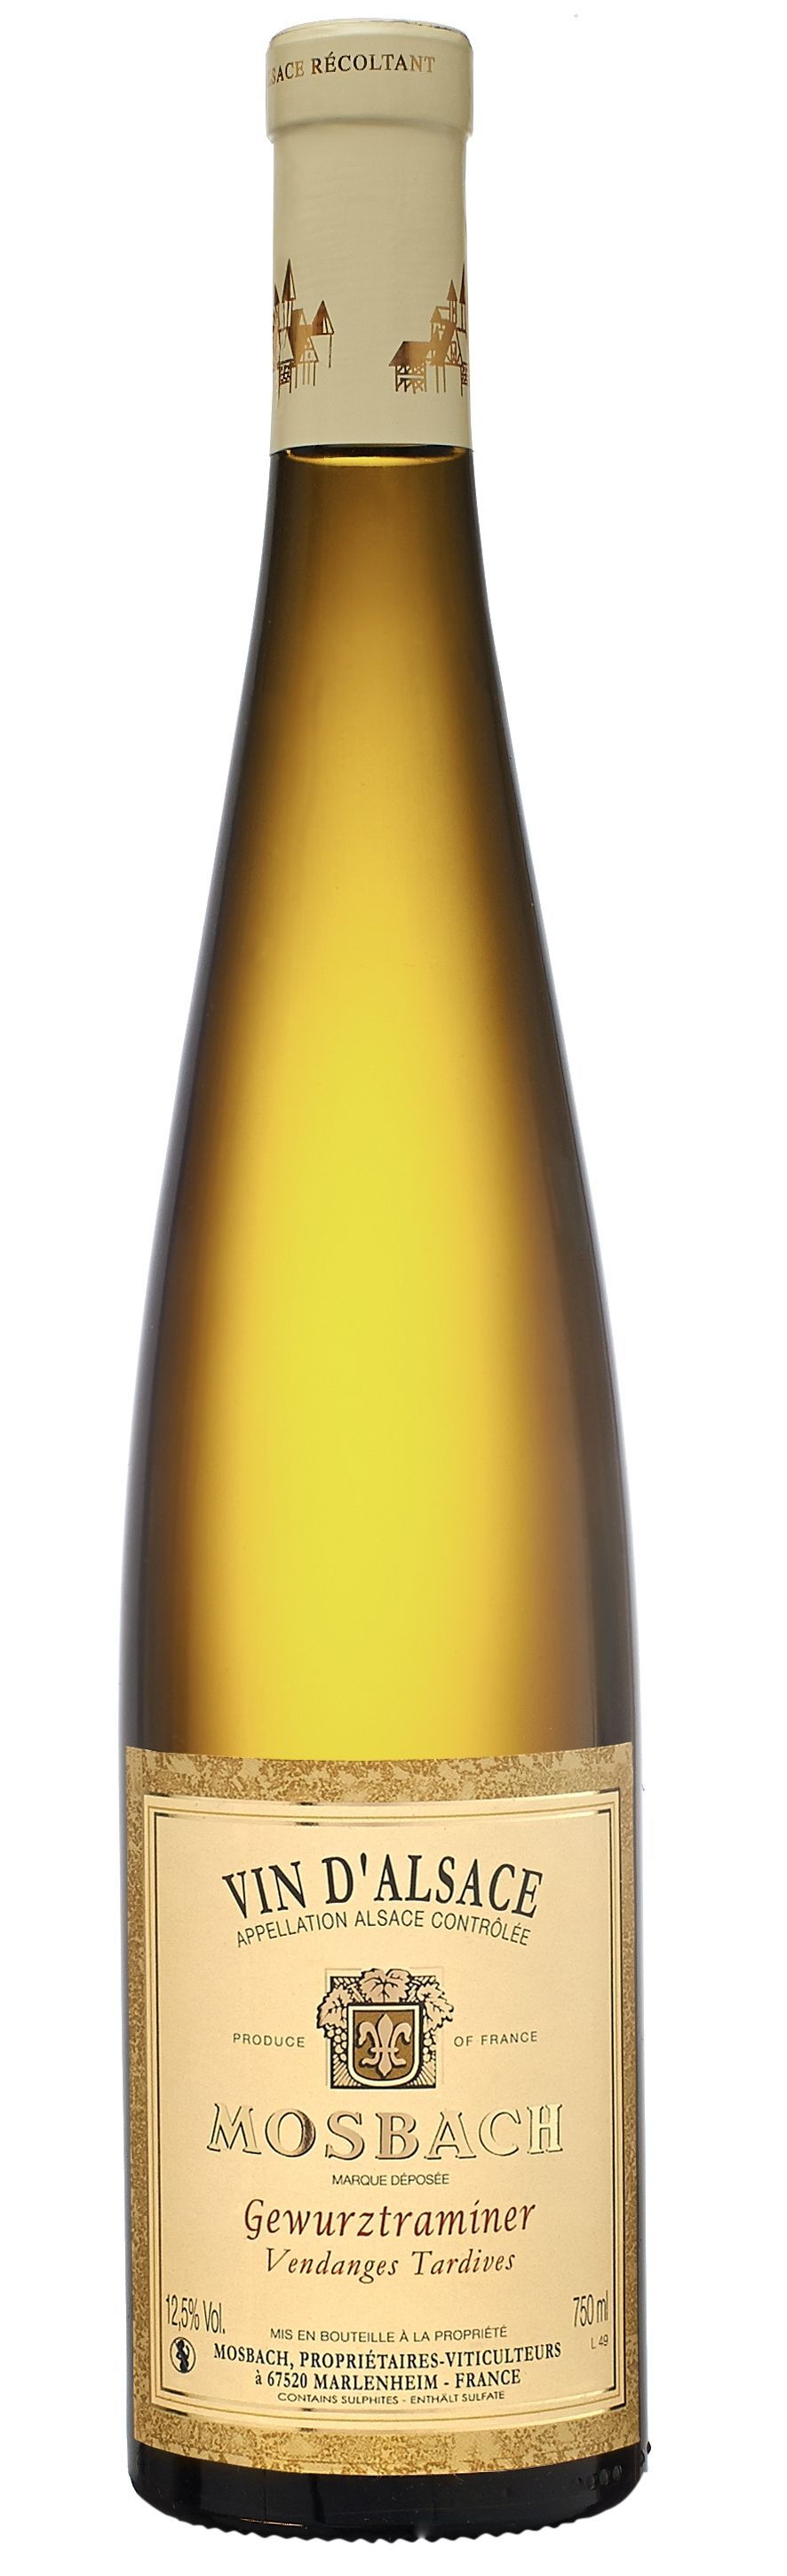 GFA MOSBACH (MARLENHEIM) Gewurztraminer Vendanges Tardives Mosbach, Blanc, 2018, Alsace ou Vin d'Alsace. Bottle image